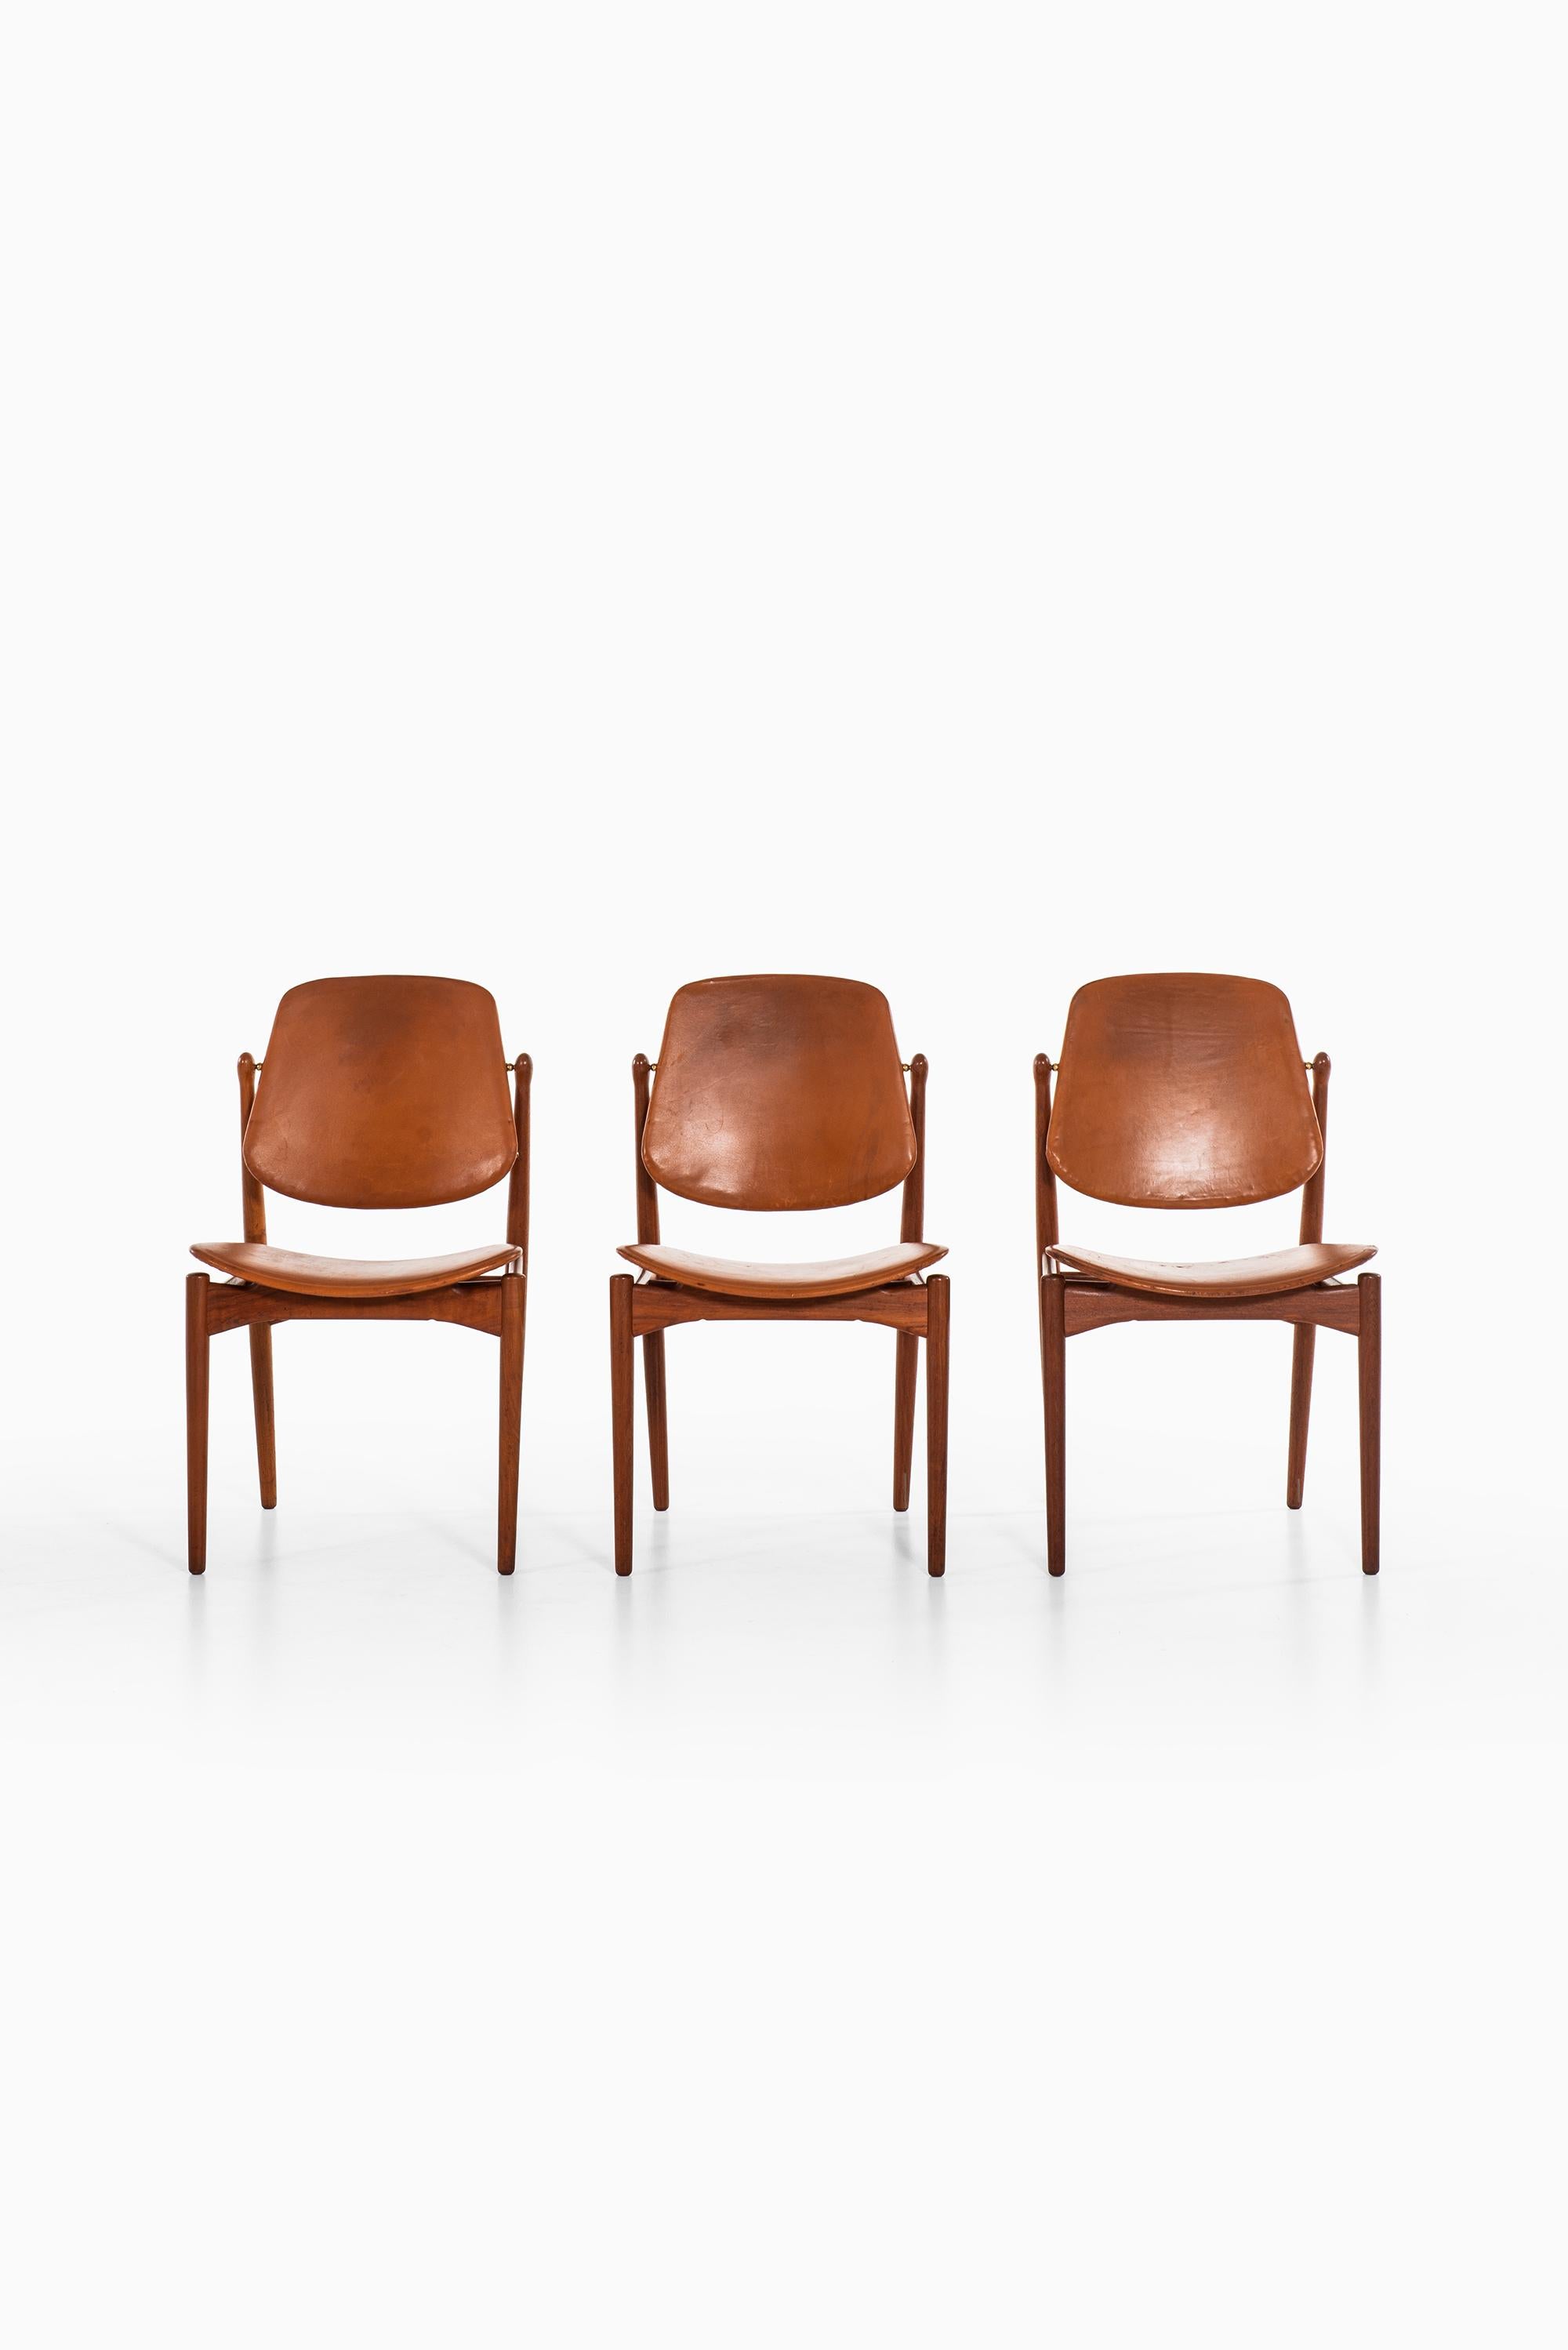 Rare set of 6 dining chairs model 203 designed by Arne Vodder. Produced by France & Daverkosen in Denmark.